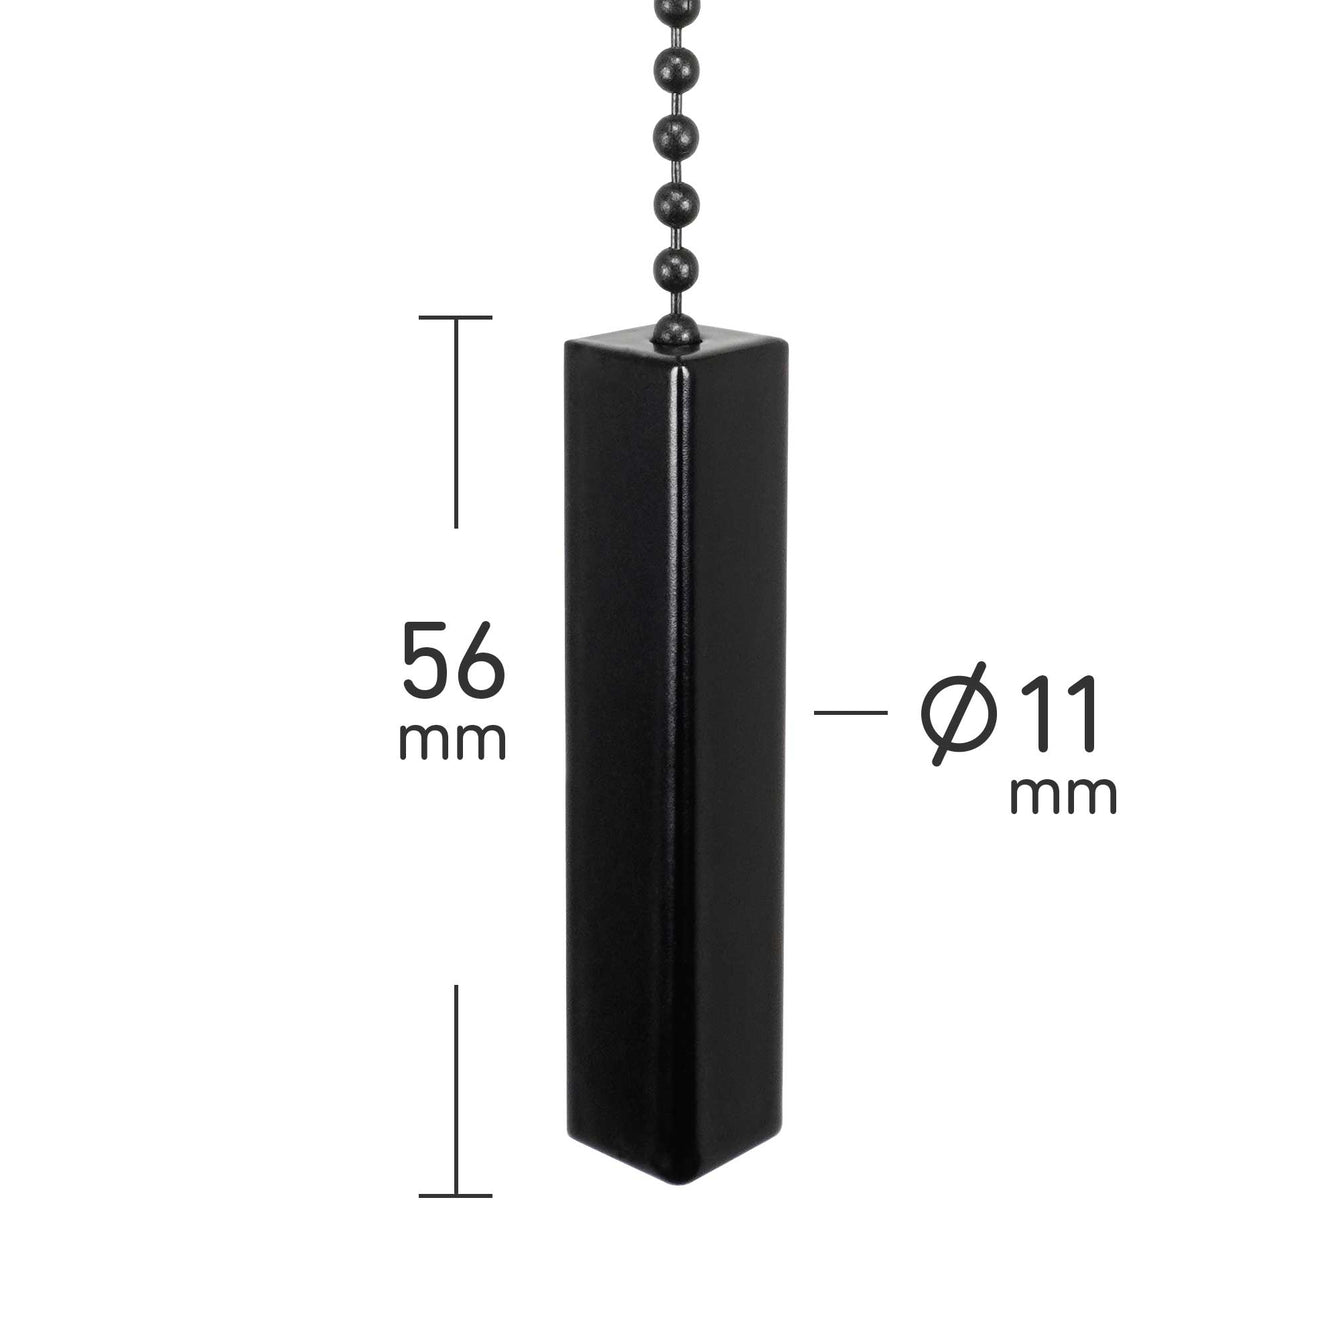 ElekTek Premium Brushed Brass Bathroom Light Pull Cord Switch Kit with Pull Chain Handle Black Cylinder / Brass